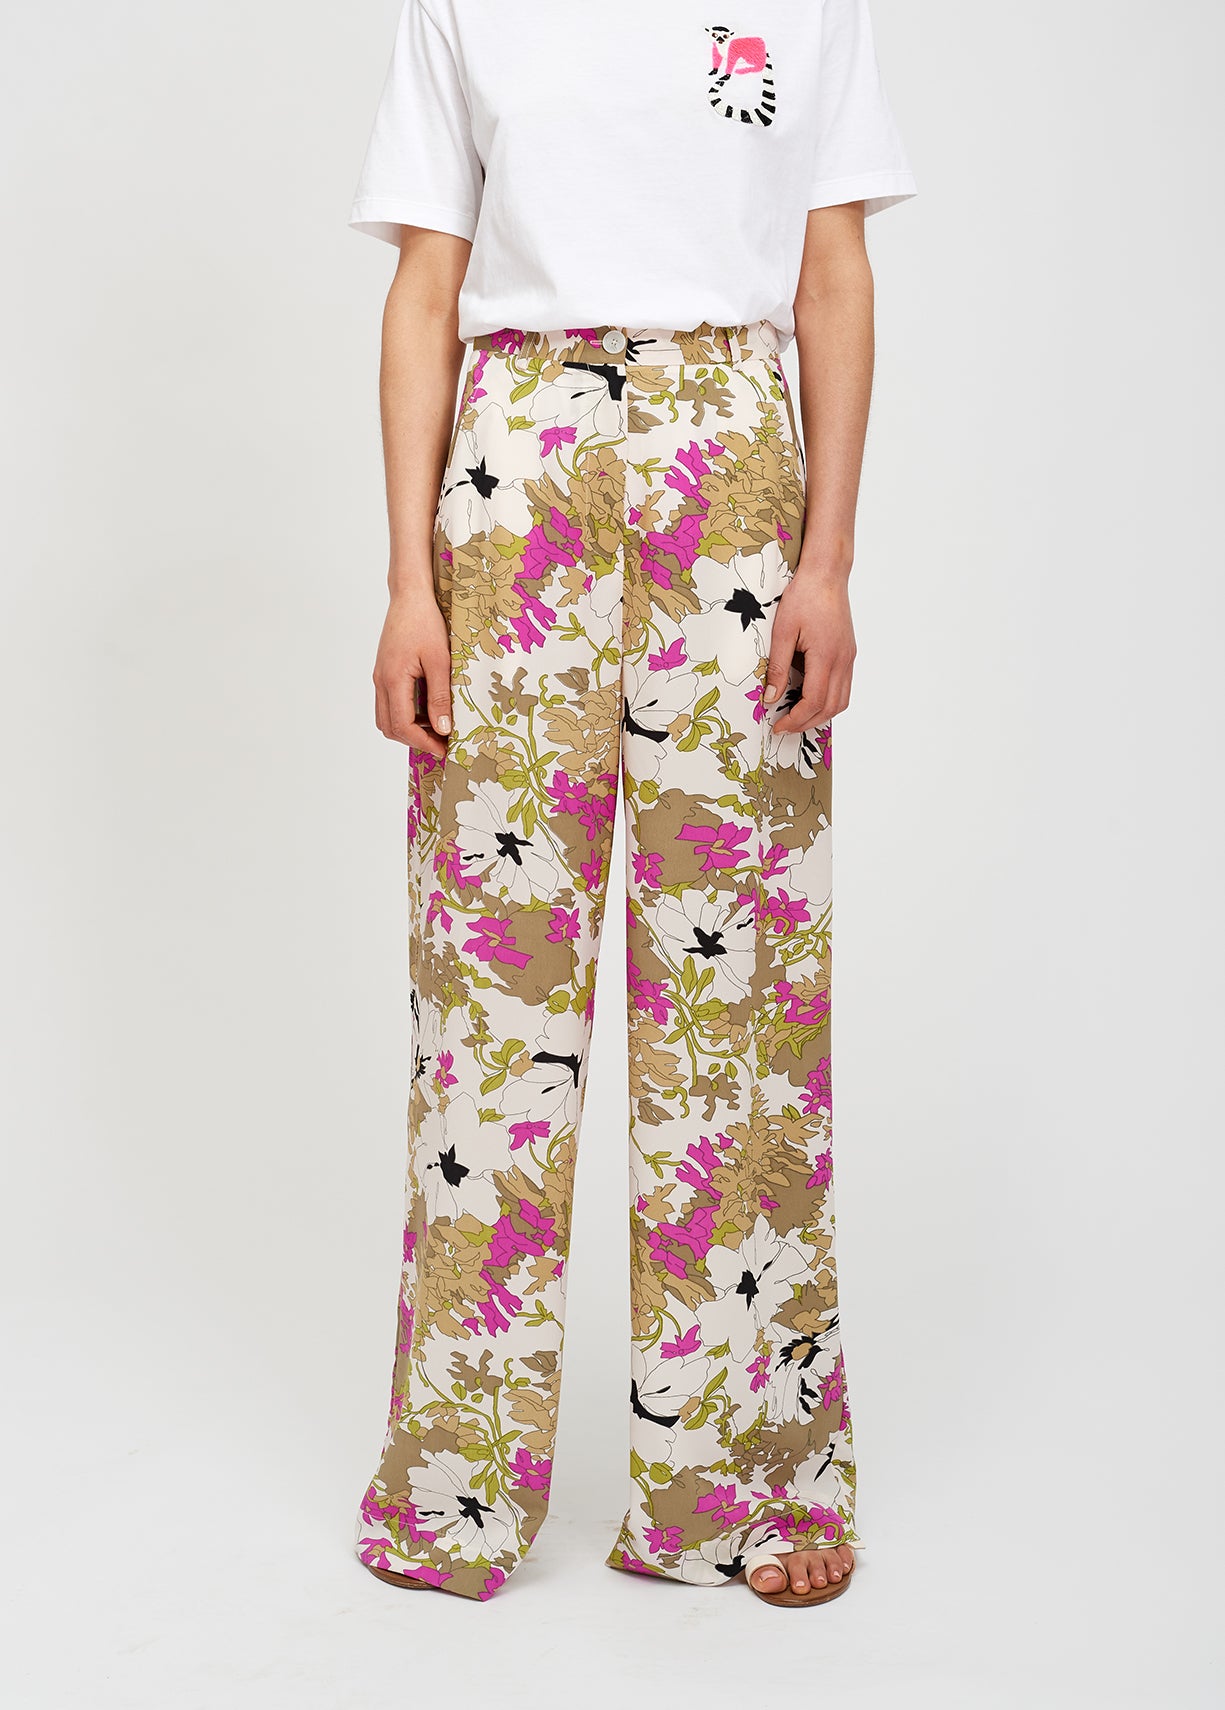 Khaki green, white and pink floral wide-leg pants